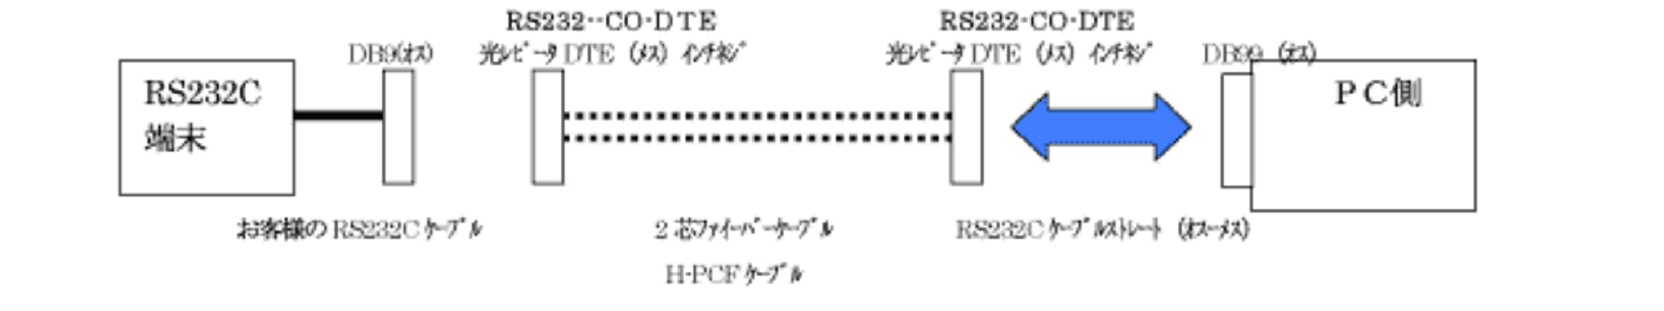 DTE 端末一PC 間ケーブル接続図